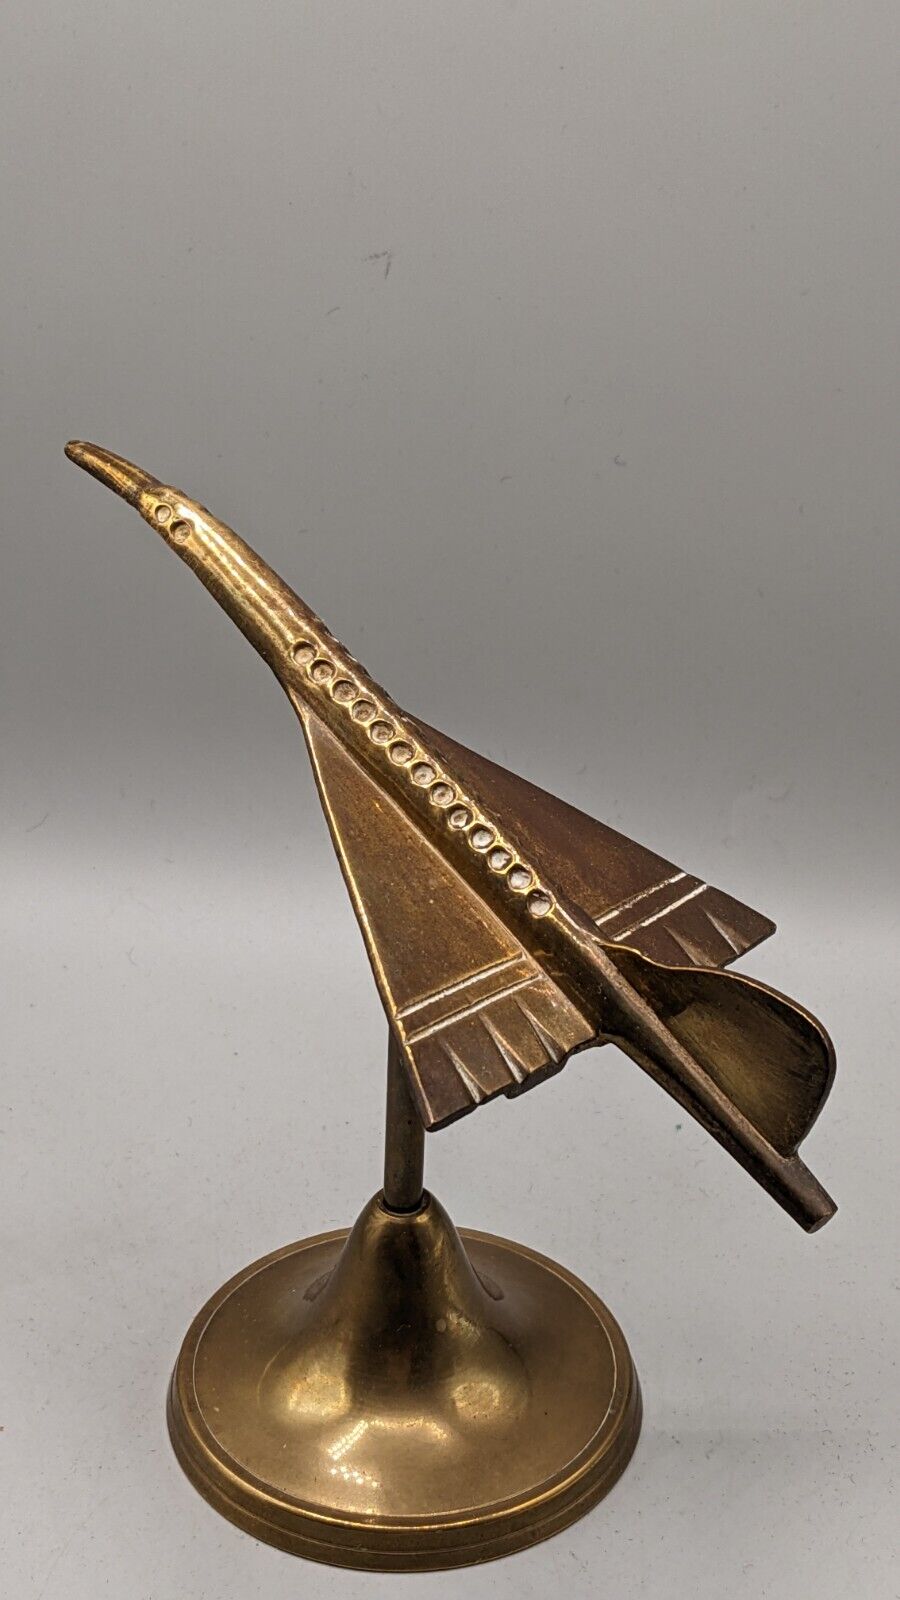 Vintage French Brass Desk Model Of Concorde